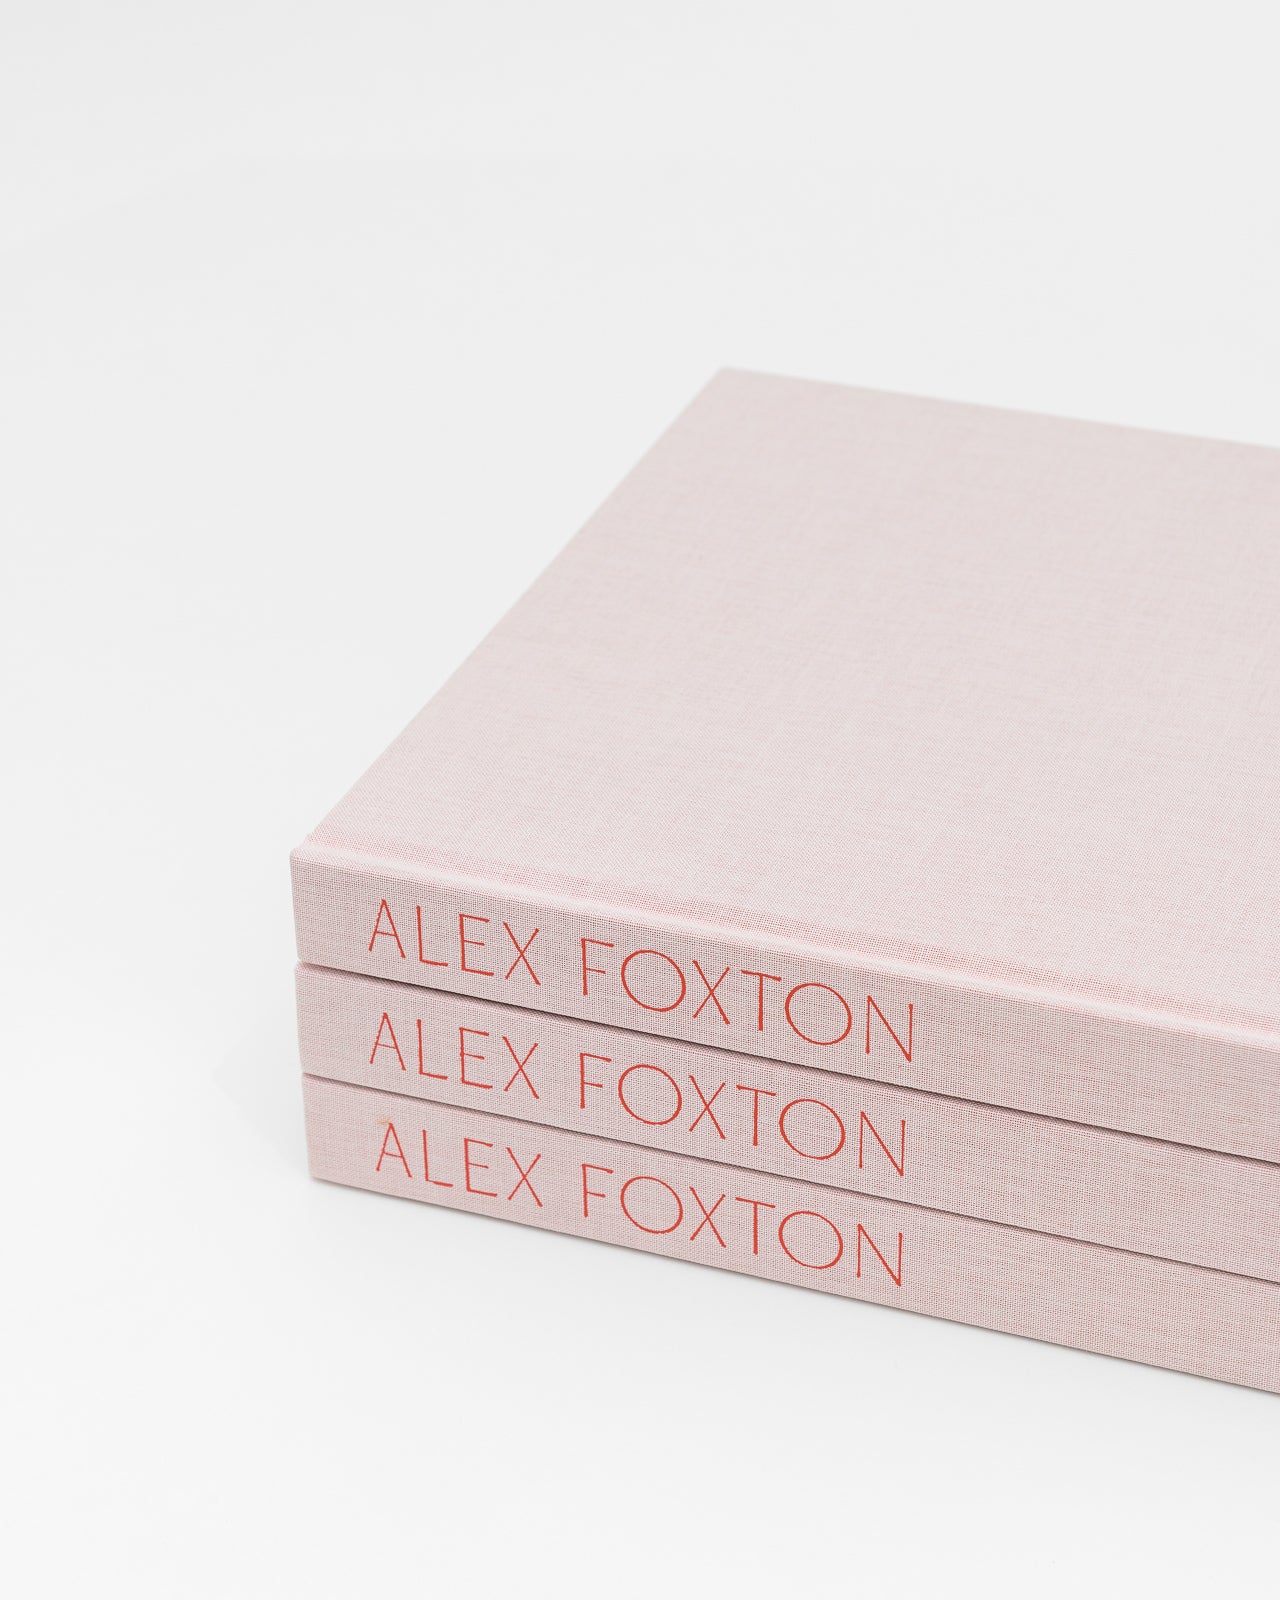 Alex Foxton